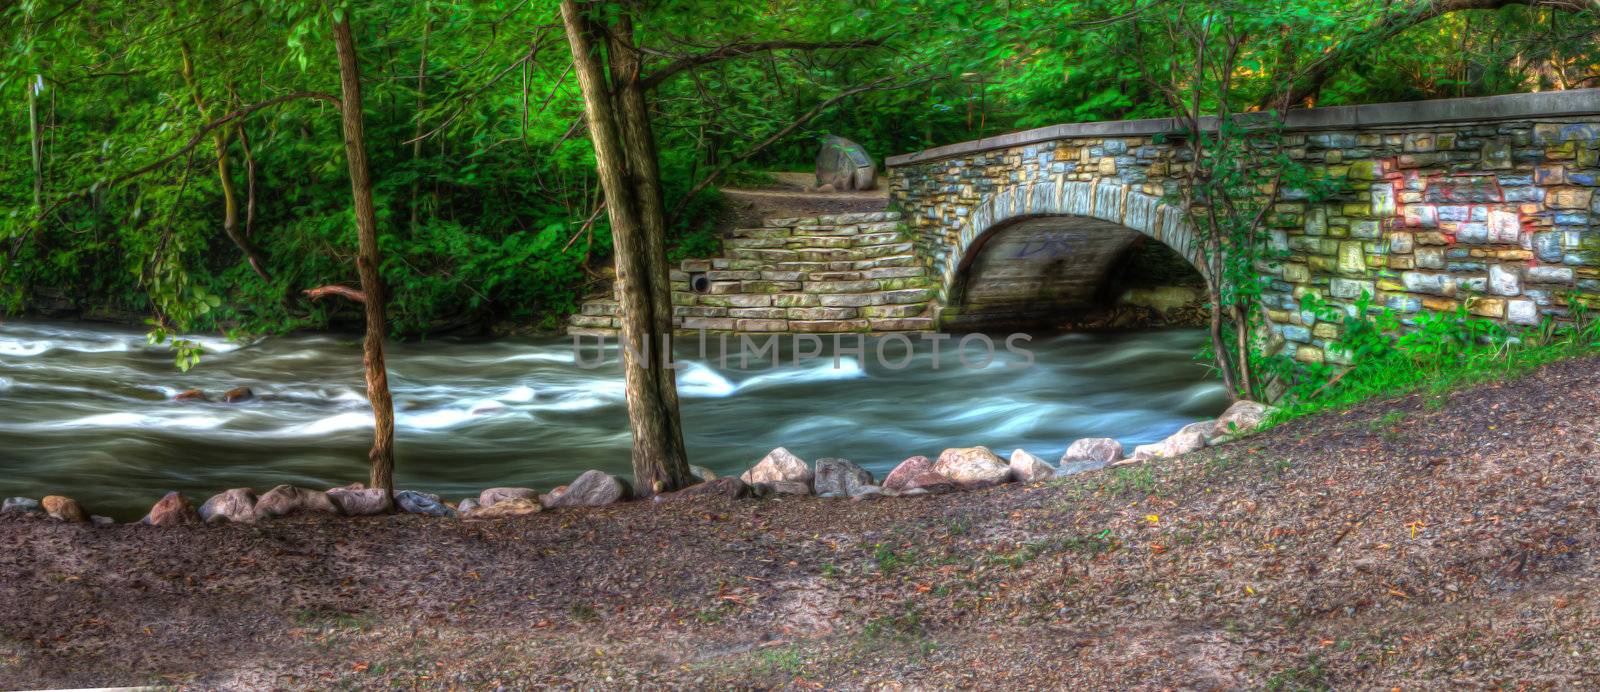 River Bridge HDR landscape by Coffee999